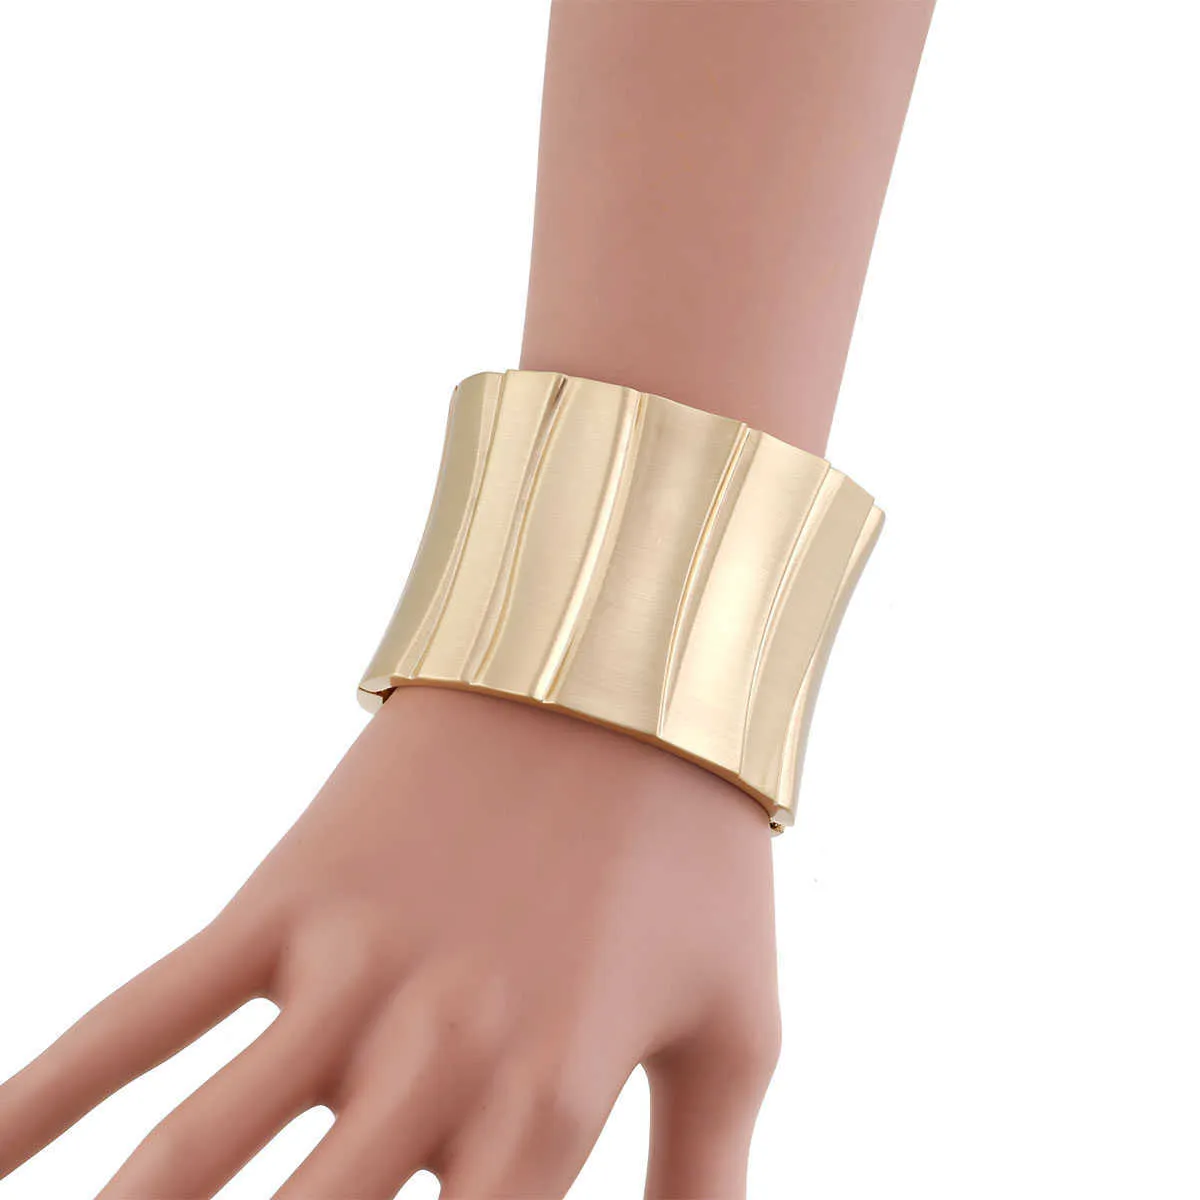 Hahatoto Neue Trendy Aussage Armreif Manschette Armband für Frauen Metall Poliert Chunky Armband Armreif Party Hochzeit Pulseira Q0717